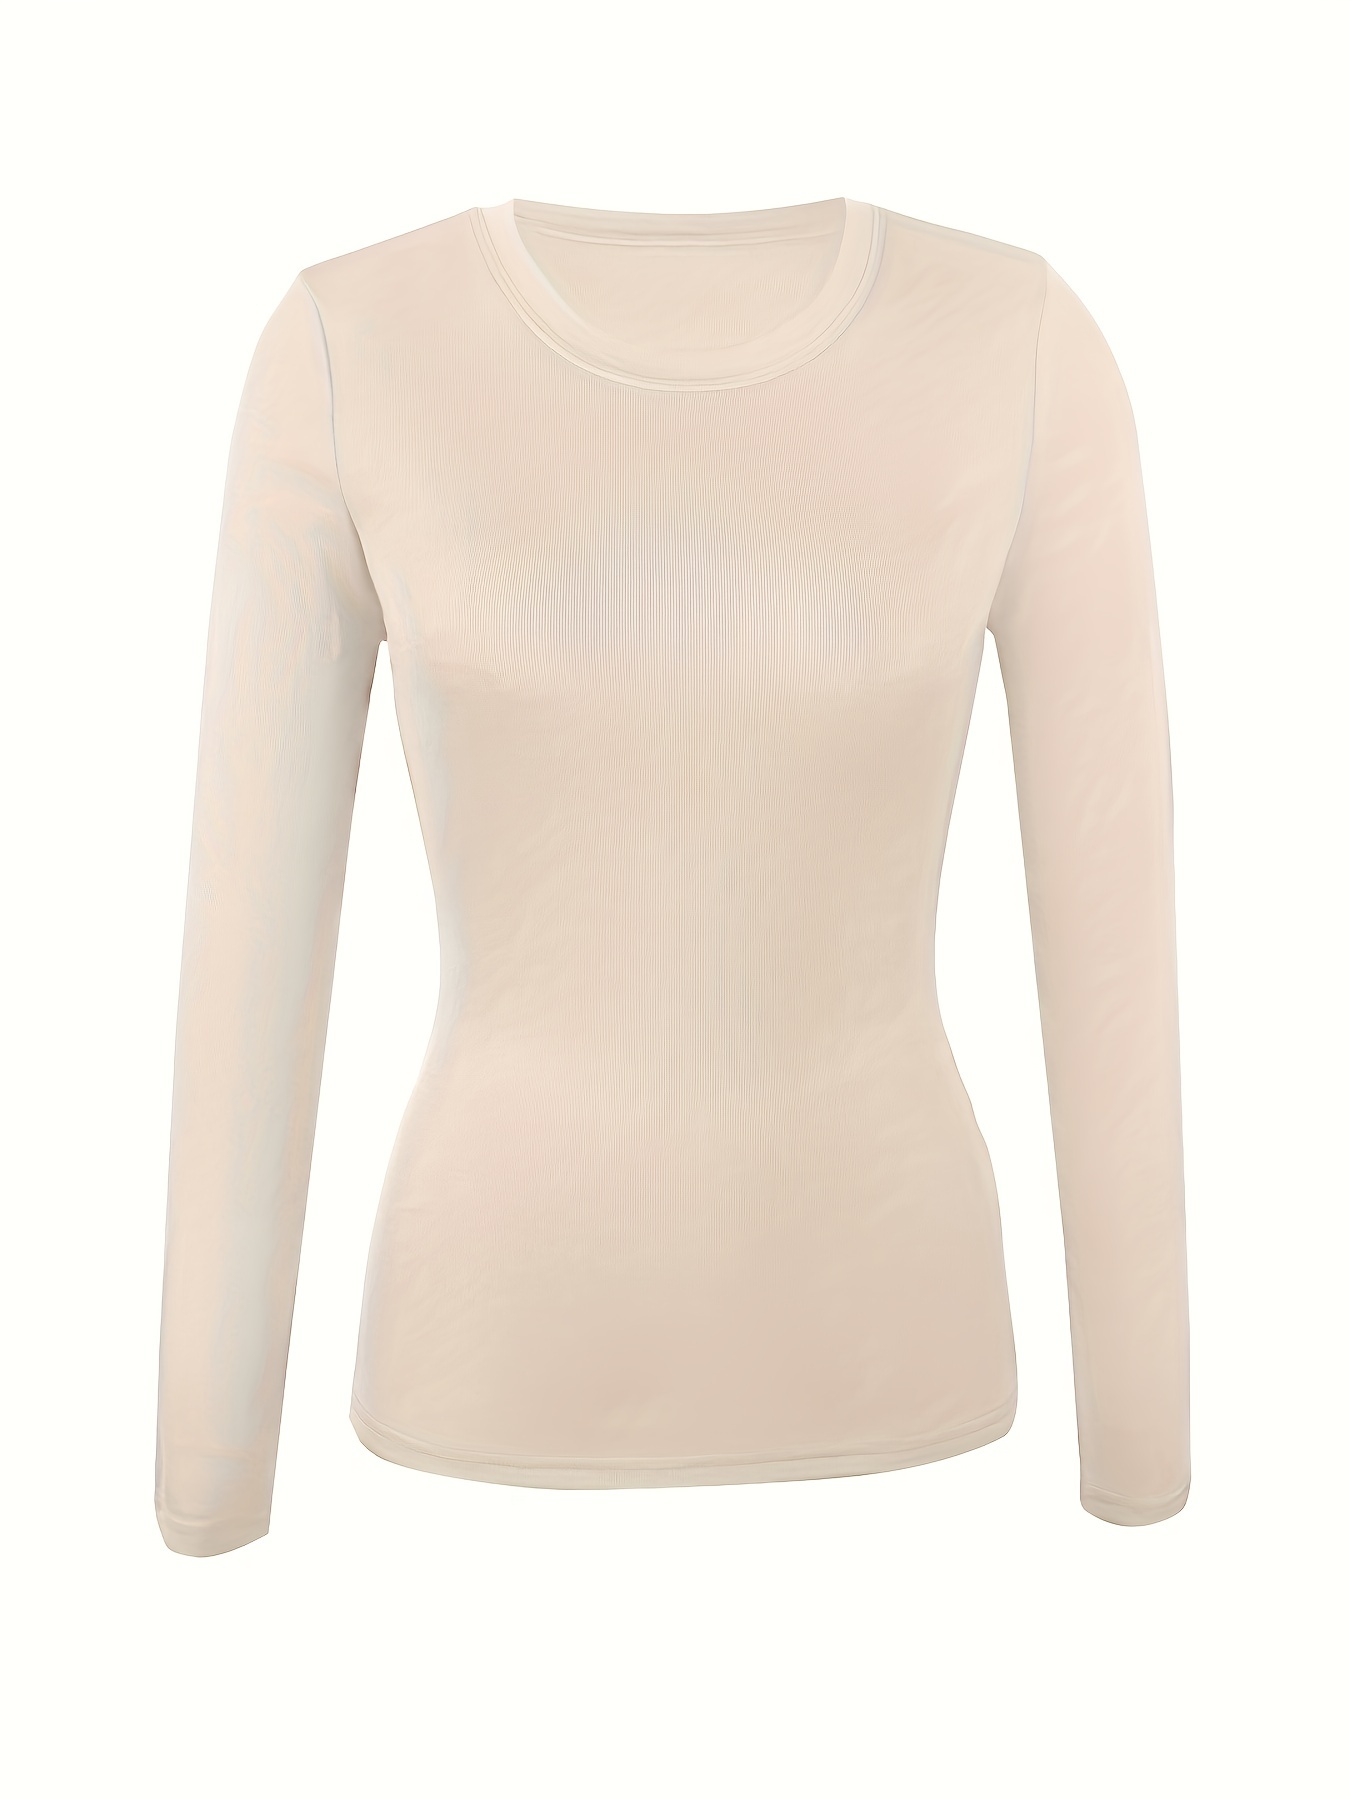 RYRJJ Womens Crewneck Short Sleeve Ribbed T-Shirt Slim Fit Tops Solid Basic  Tee(Khaki,L)